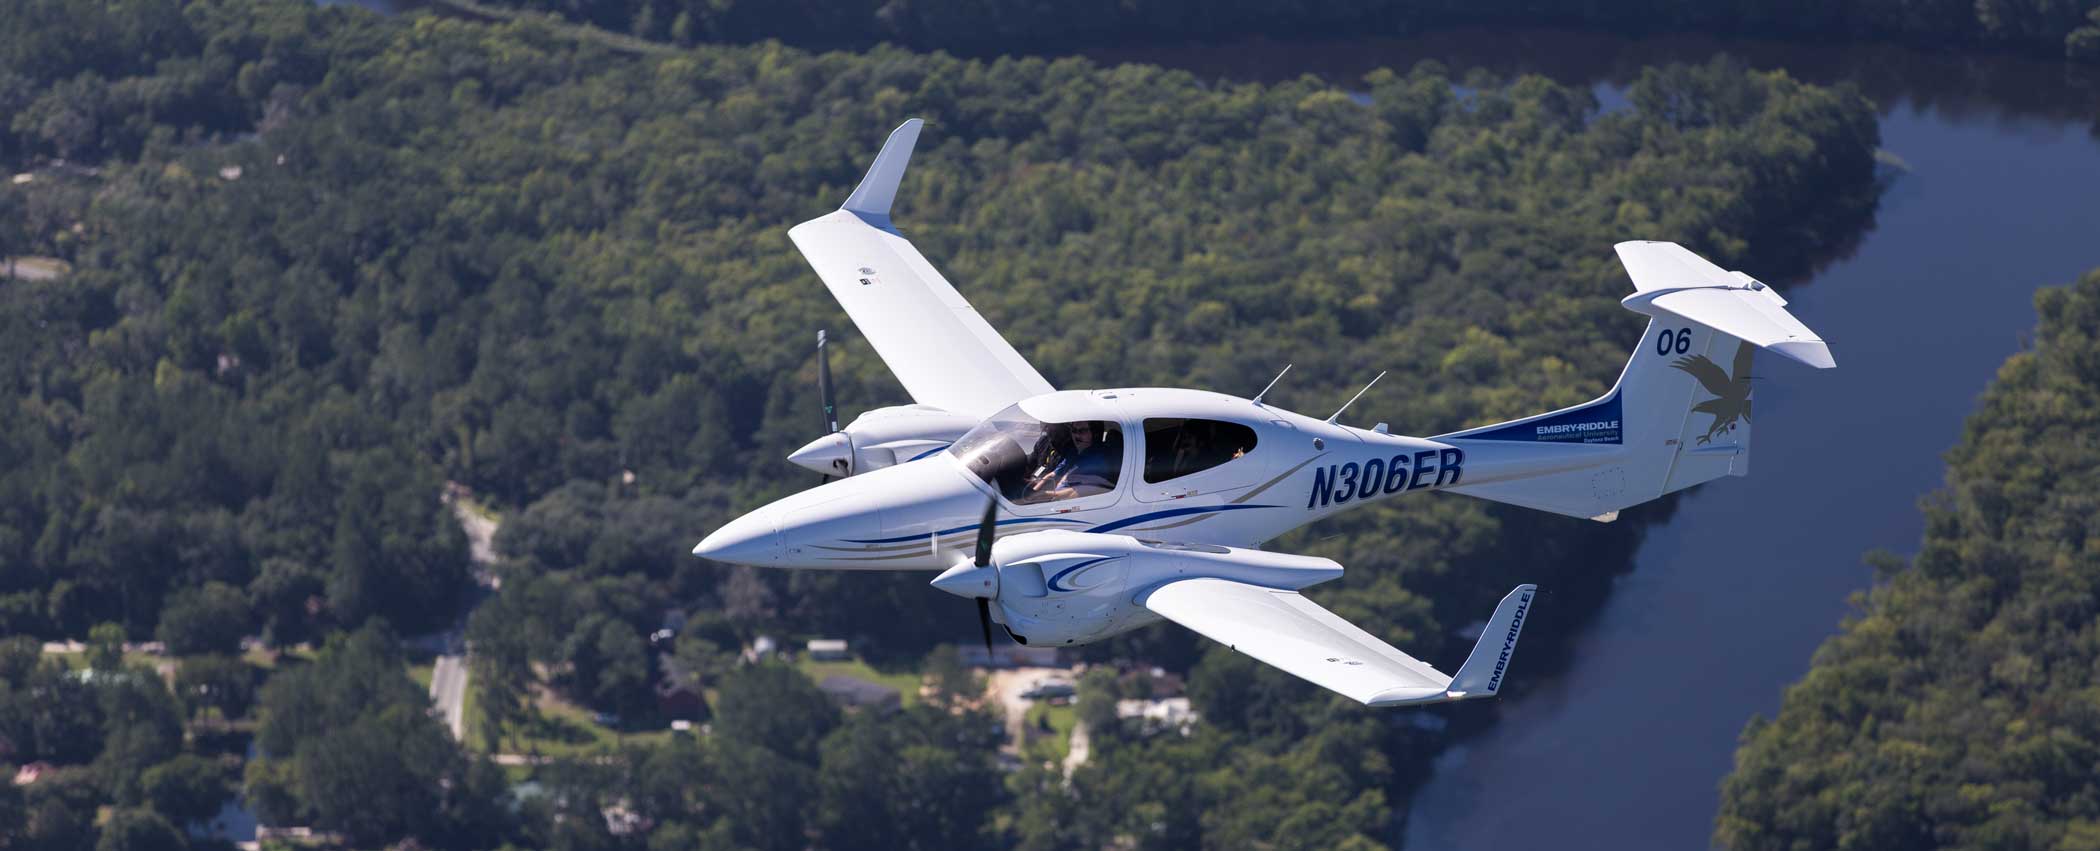 Embry-Riddle Aeronautical University Diamond plane flies over swamp 